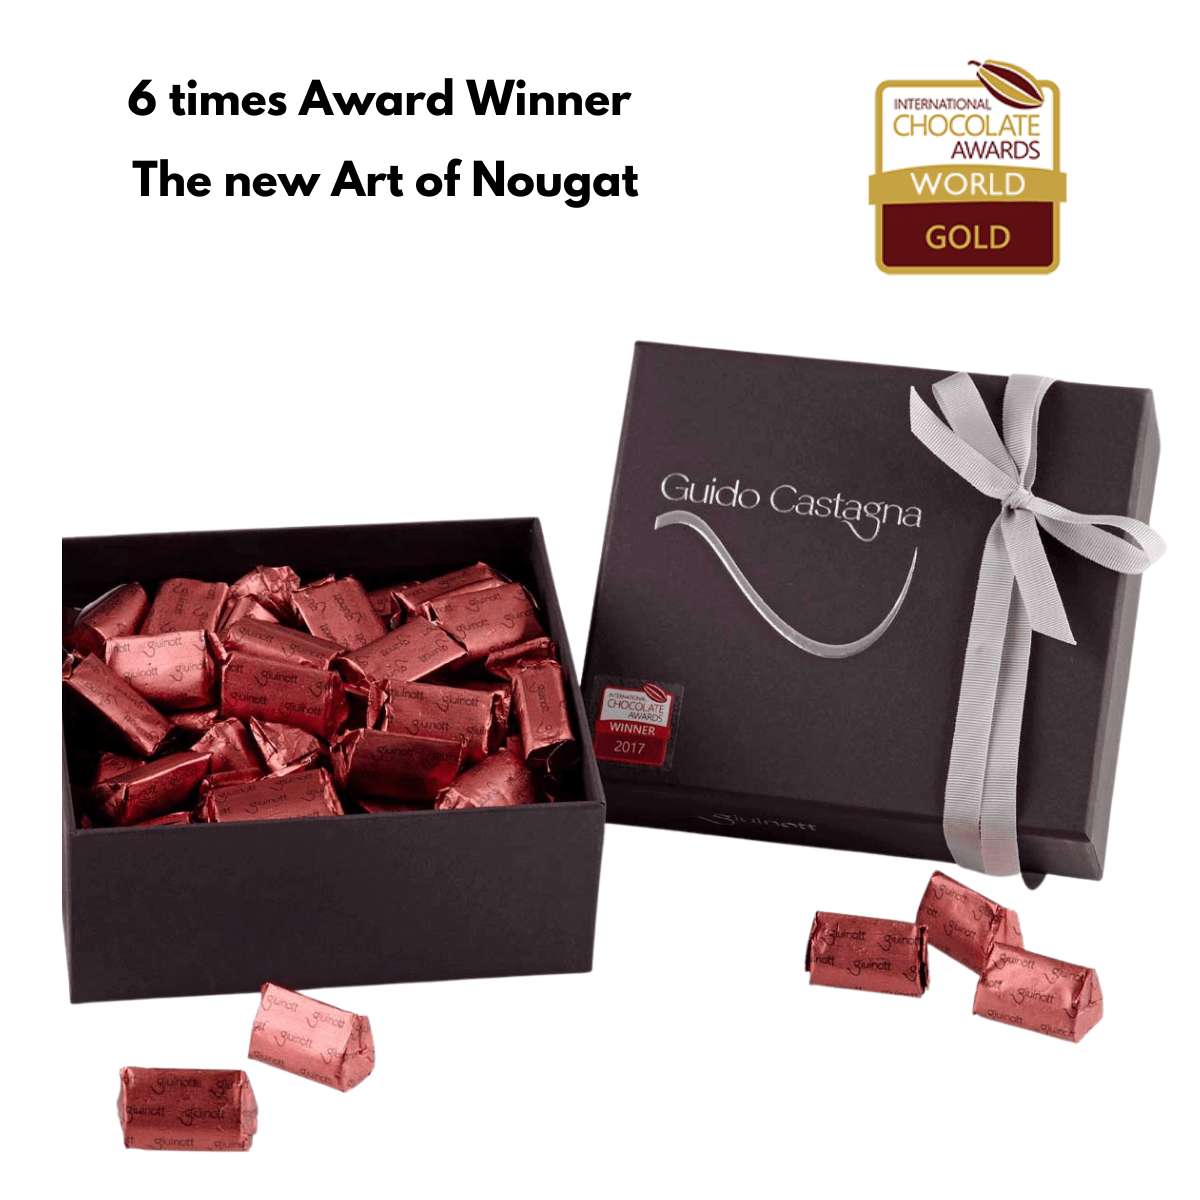 Guido Castagna Giuinott - mehrfacher Gold Award Gewinner der International Chocolate Awards in dekorativer Geschenkschachtel. Ideal auch zum Muttertag